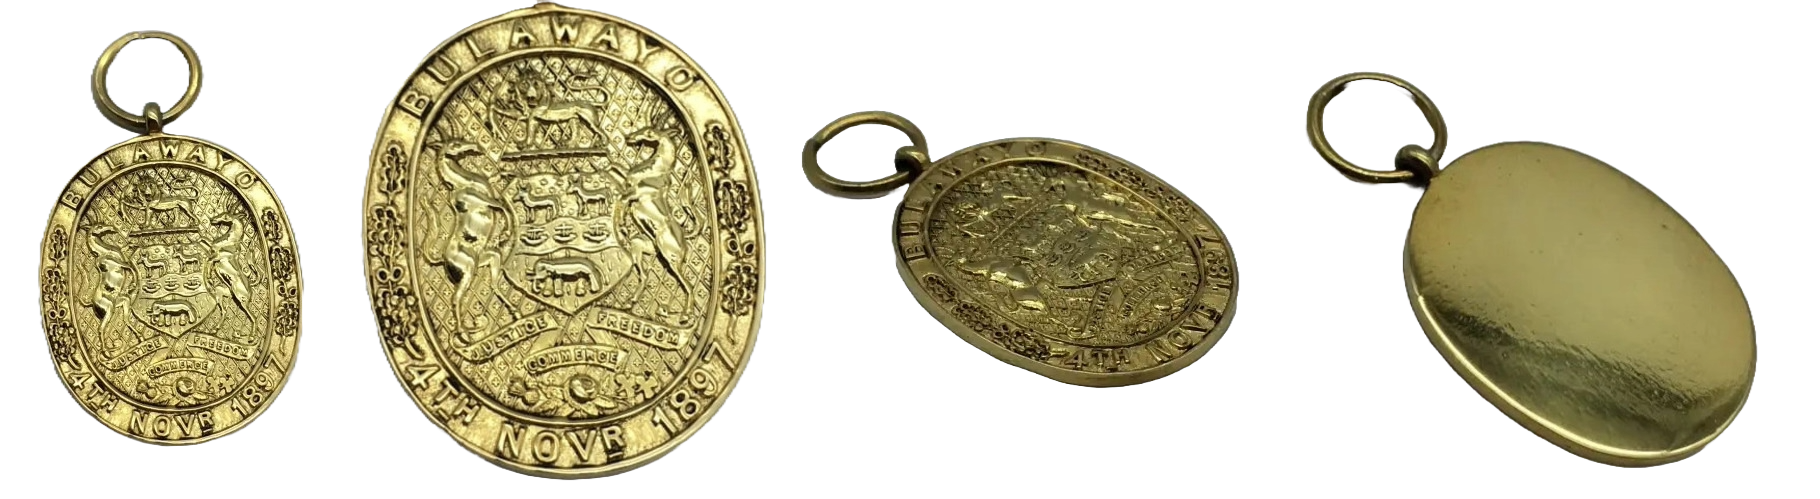 Rare Silver 'Bulawayo 1897 Railway Pass' Medallion